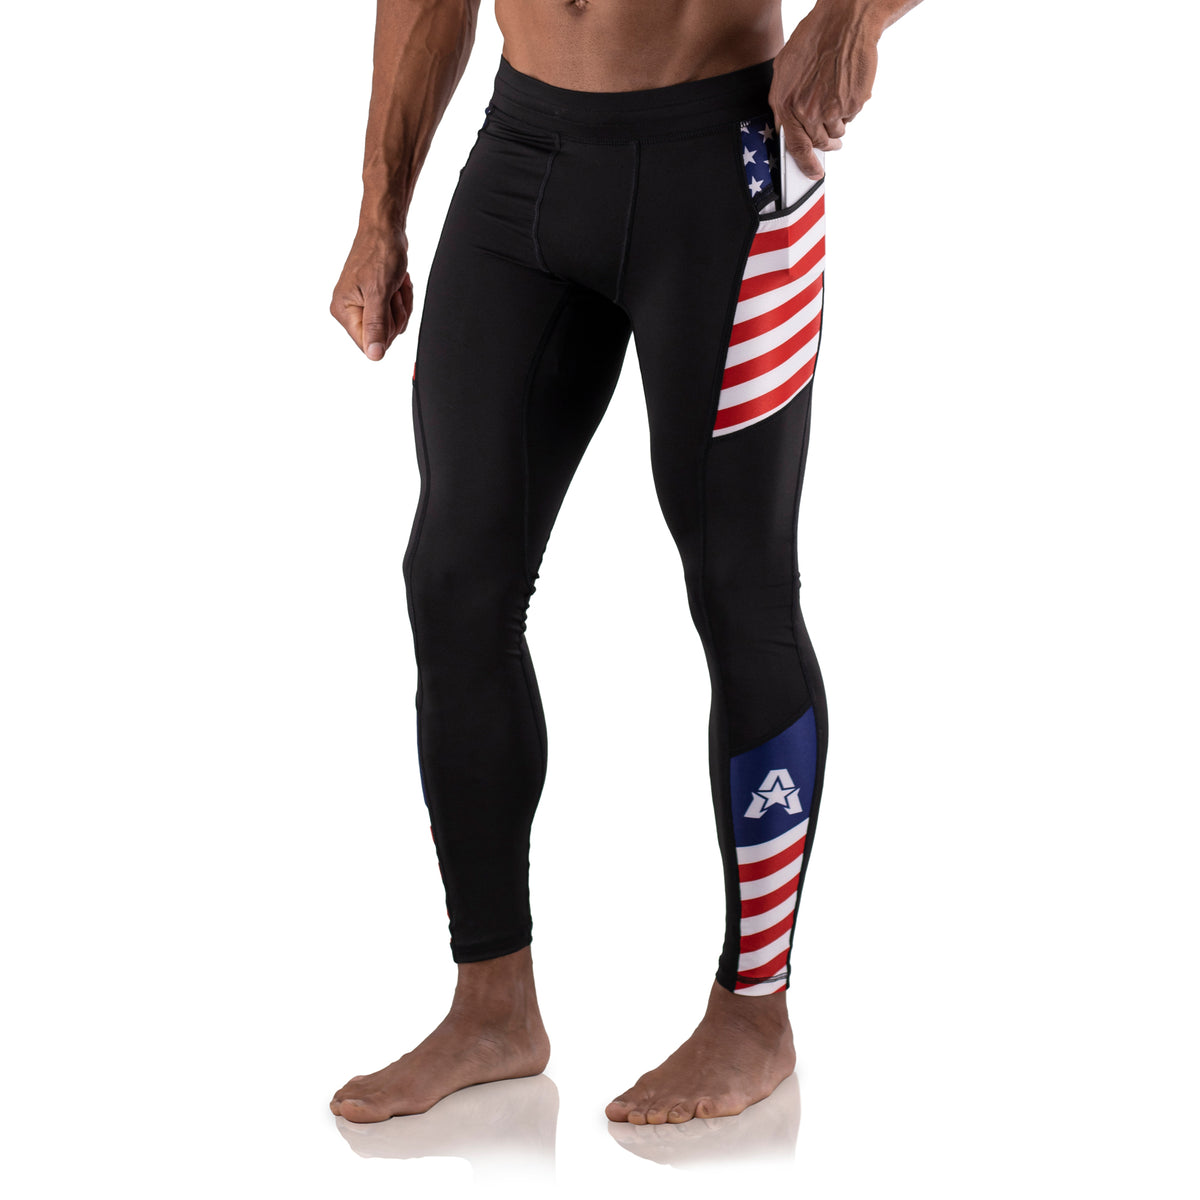 Anthem Athletics Hyperflex 7 in Men's Workout Shorts - Zipper Pocket Short  for Running, Athletic & Gym Training - Black & American Flag G2 - Small at   Men's Clothing store